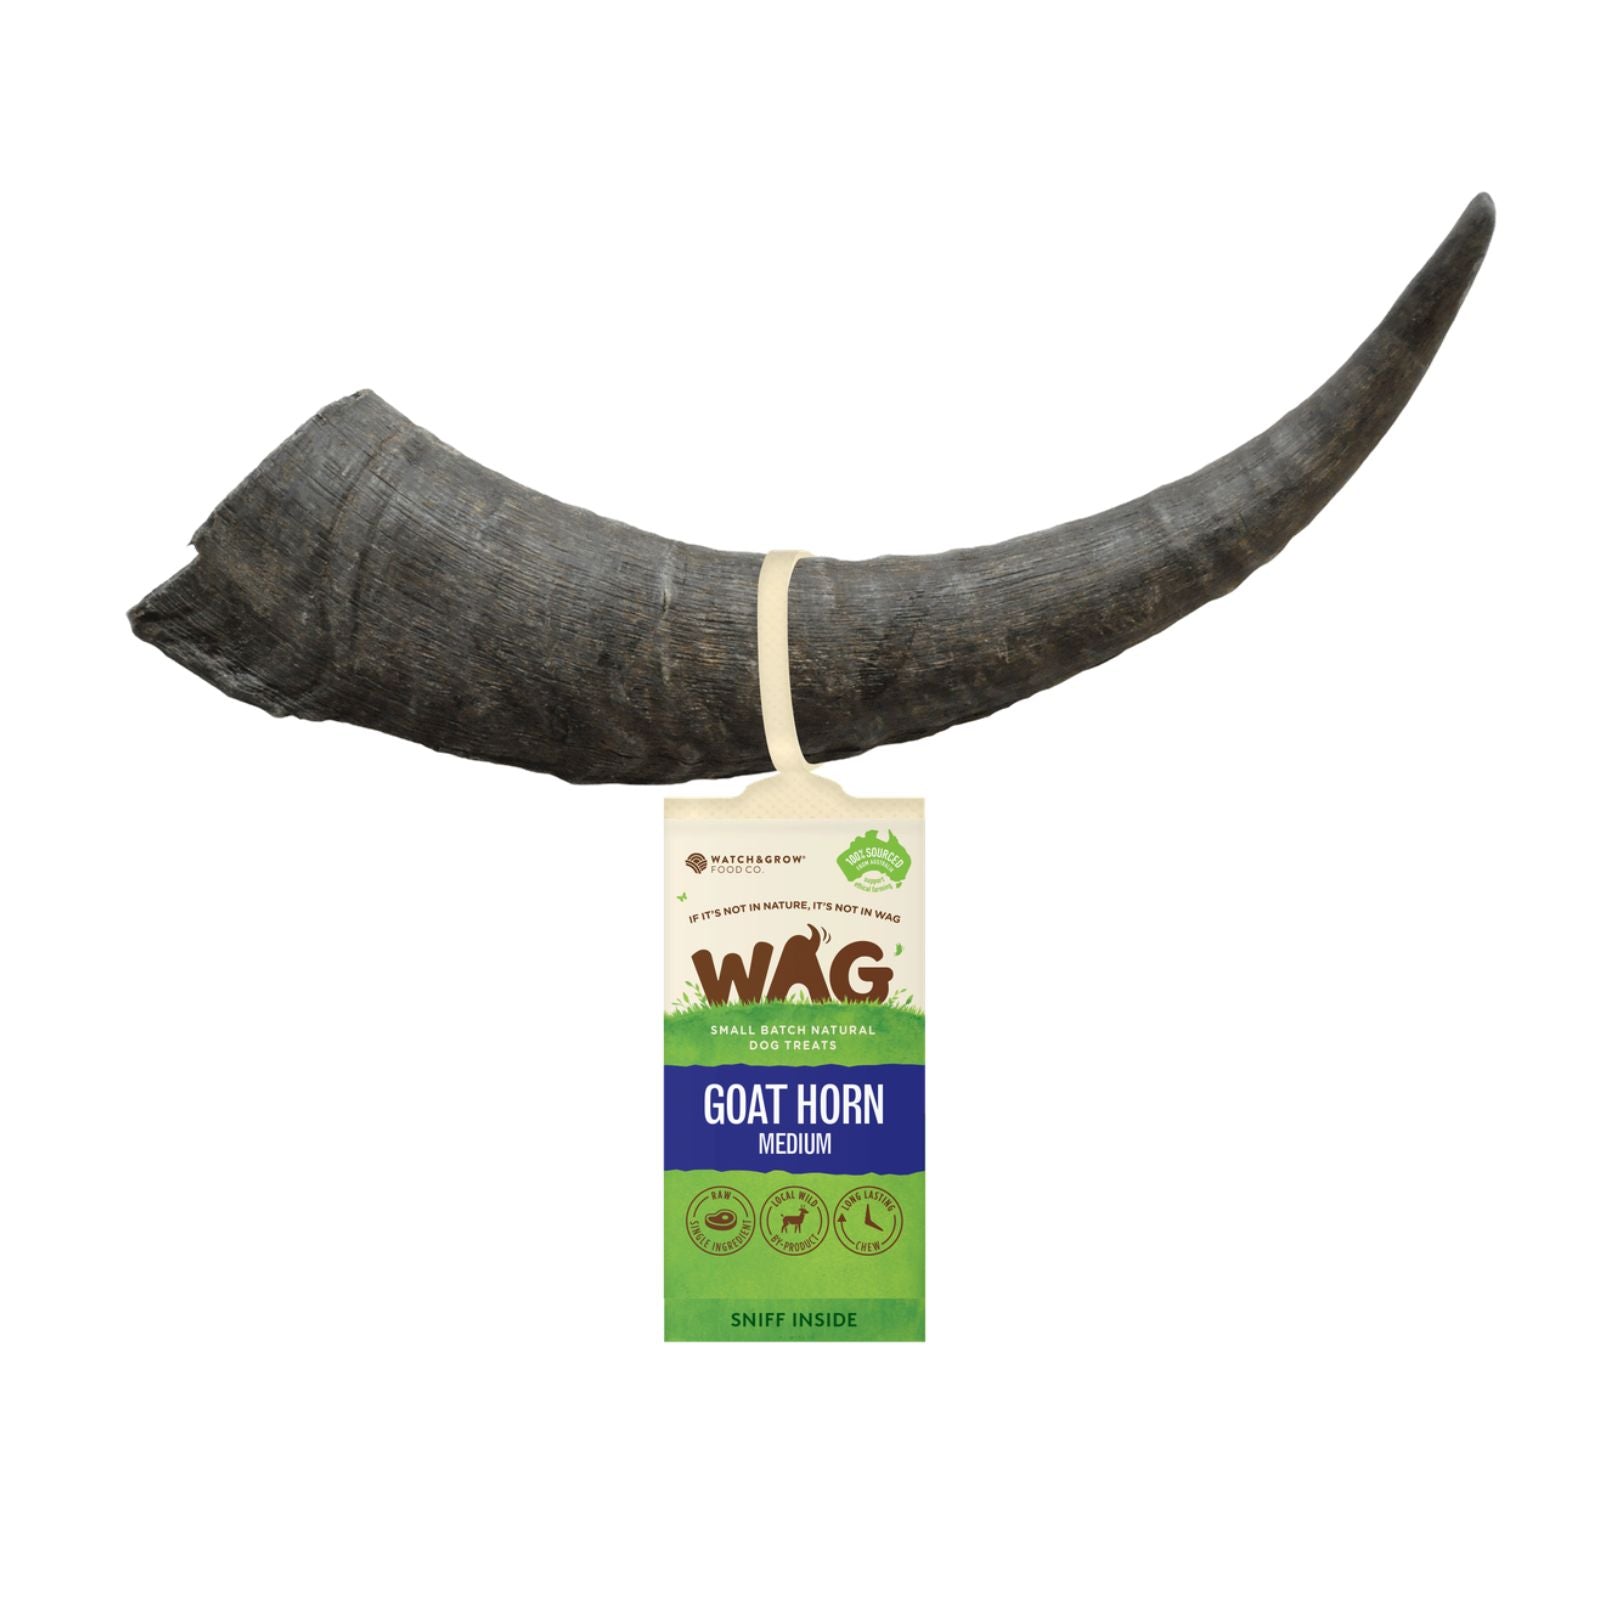 WAG Australian Goat Horn medium chew treat for dogs.